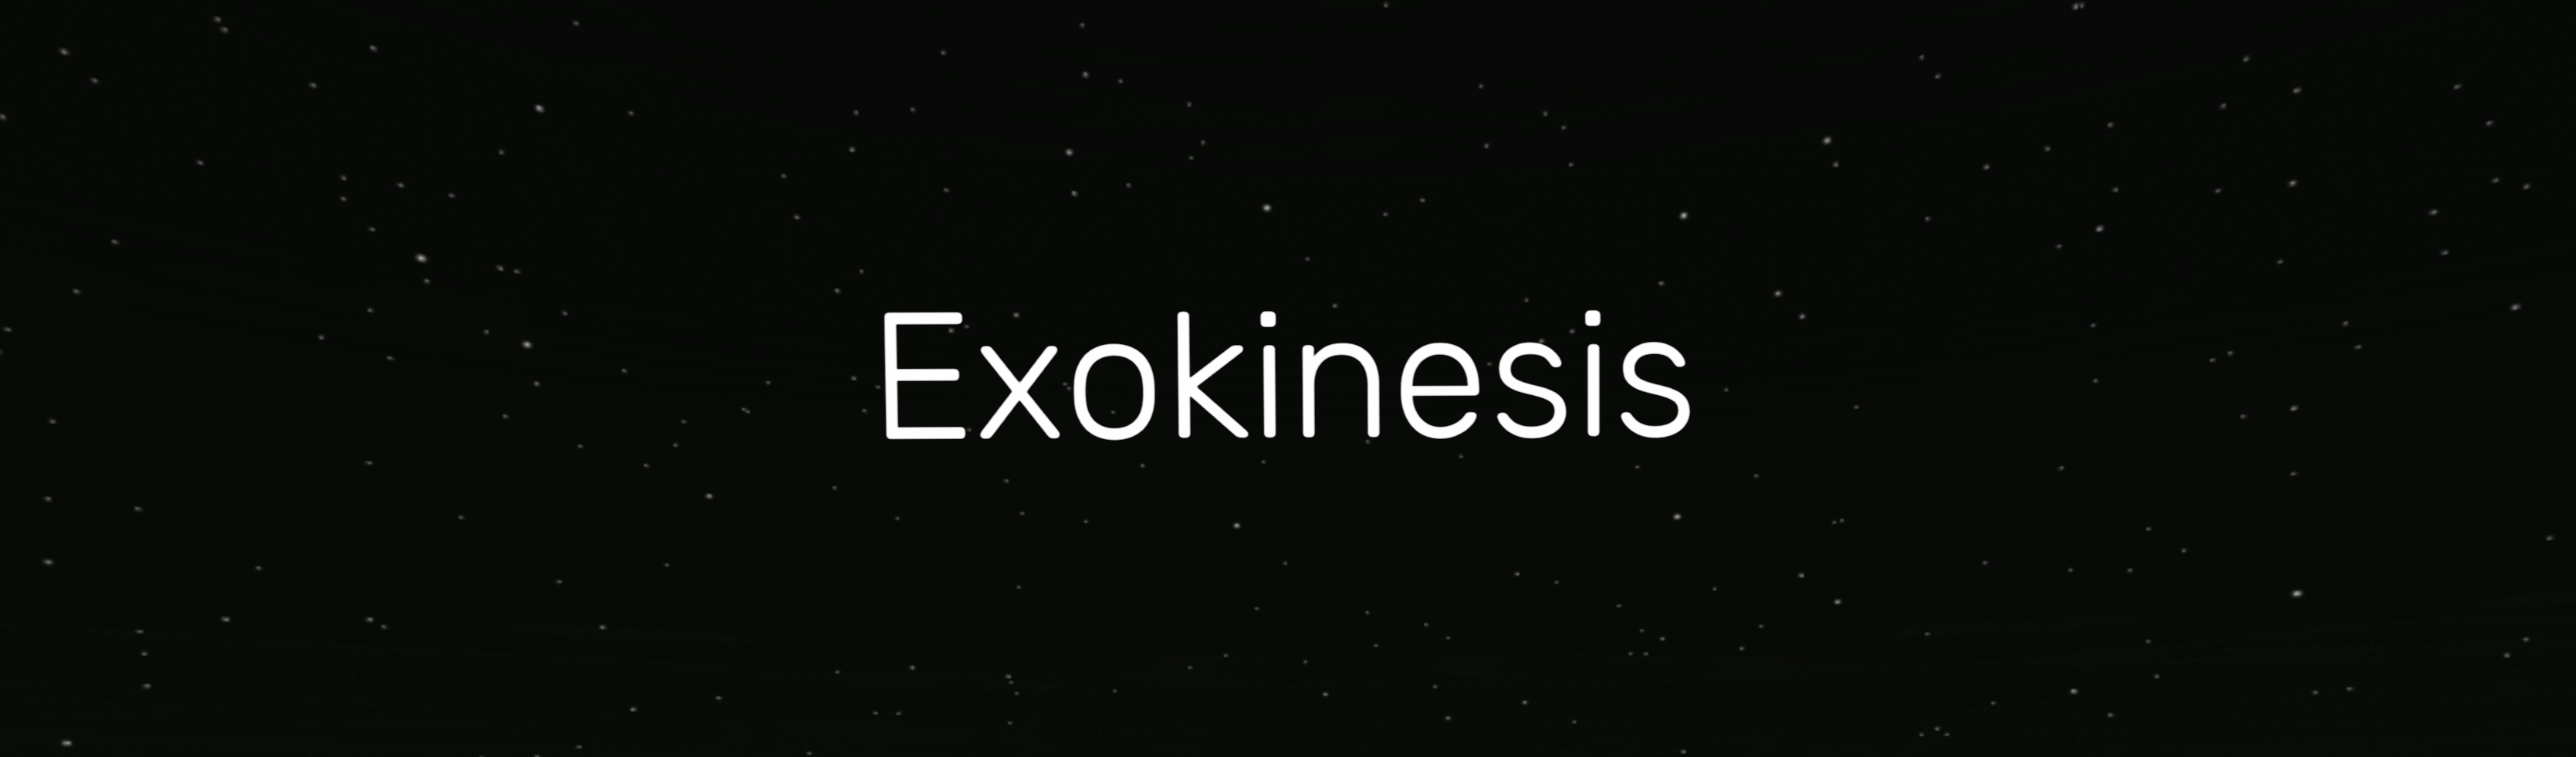 Exokinesis